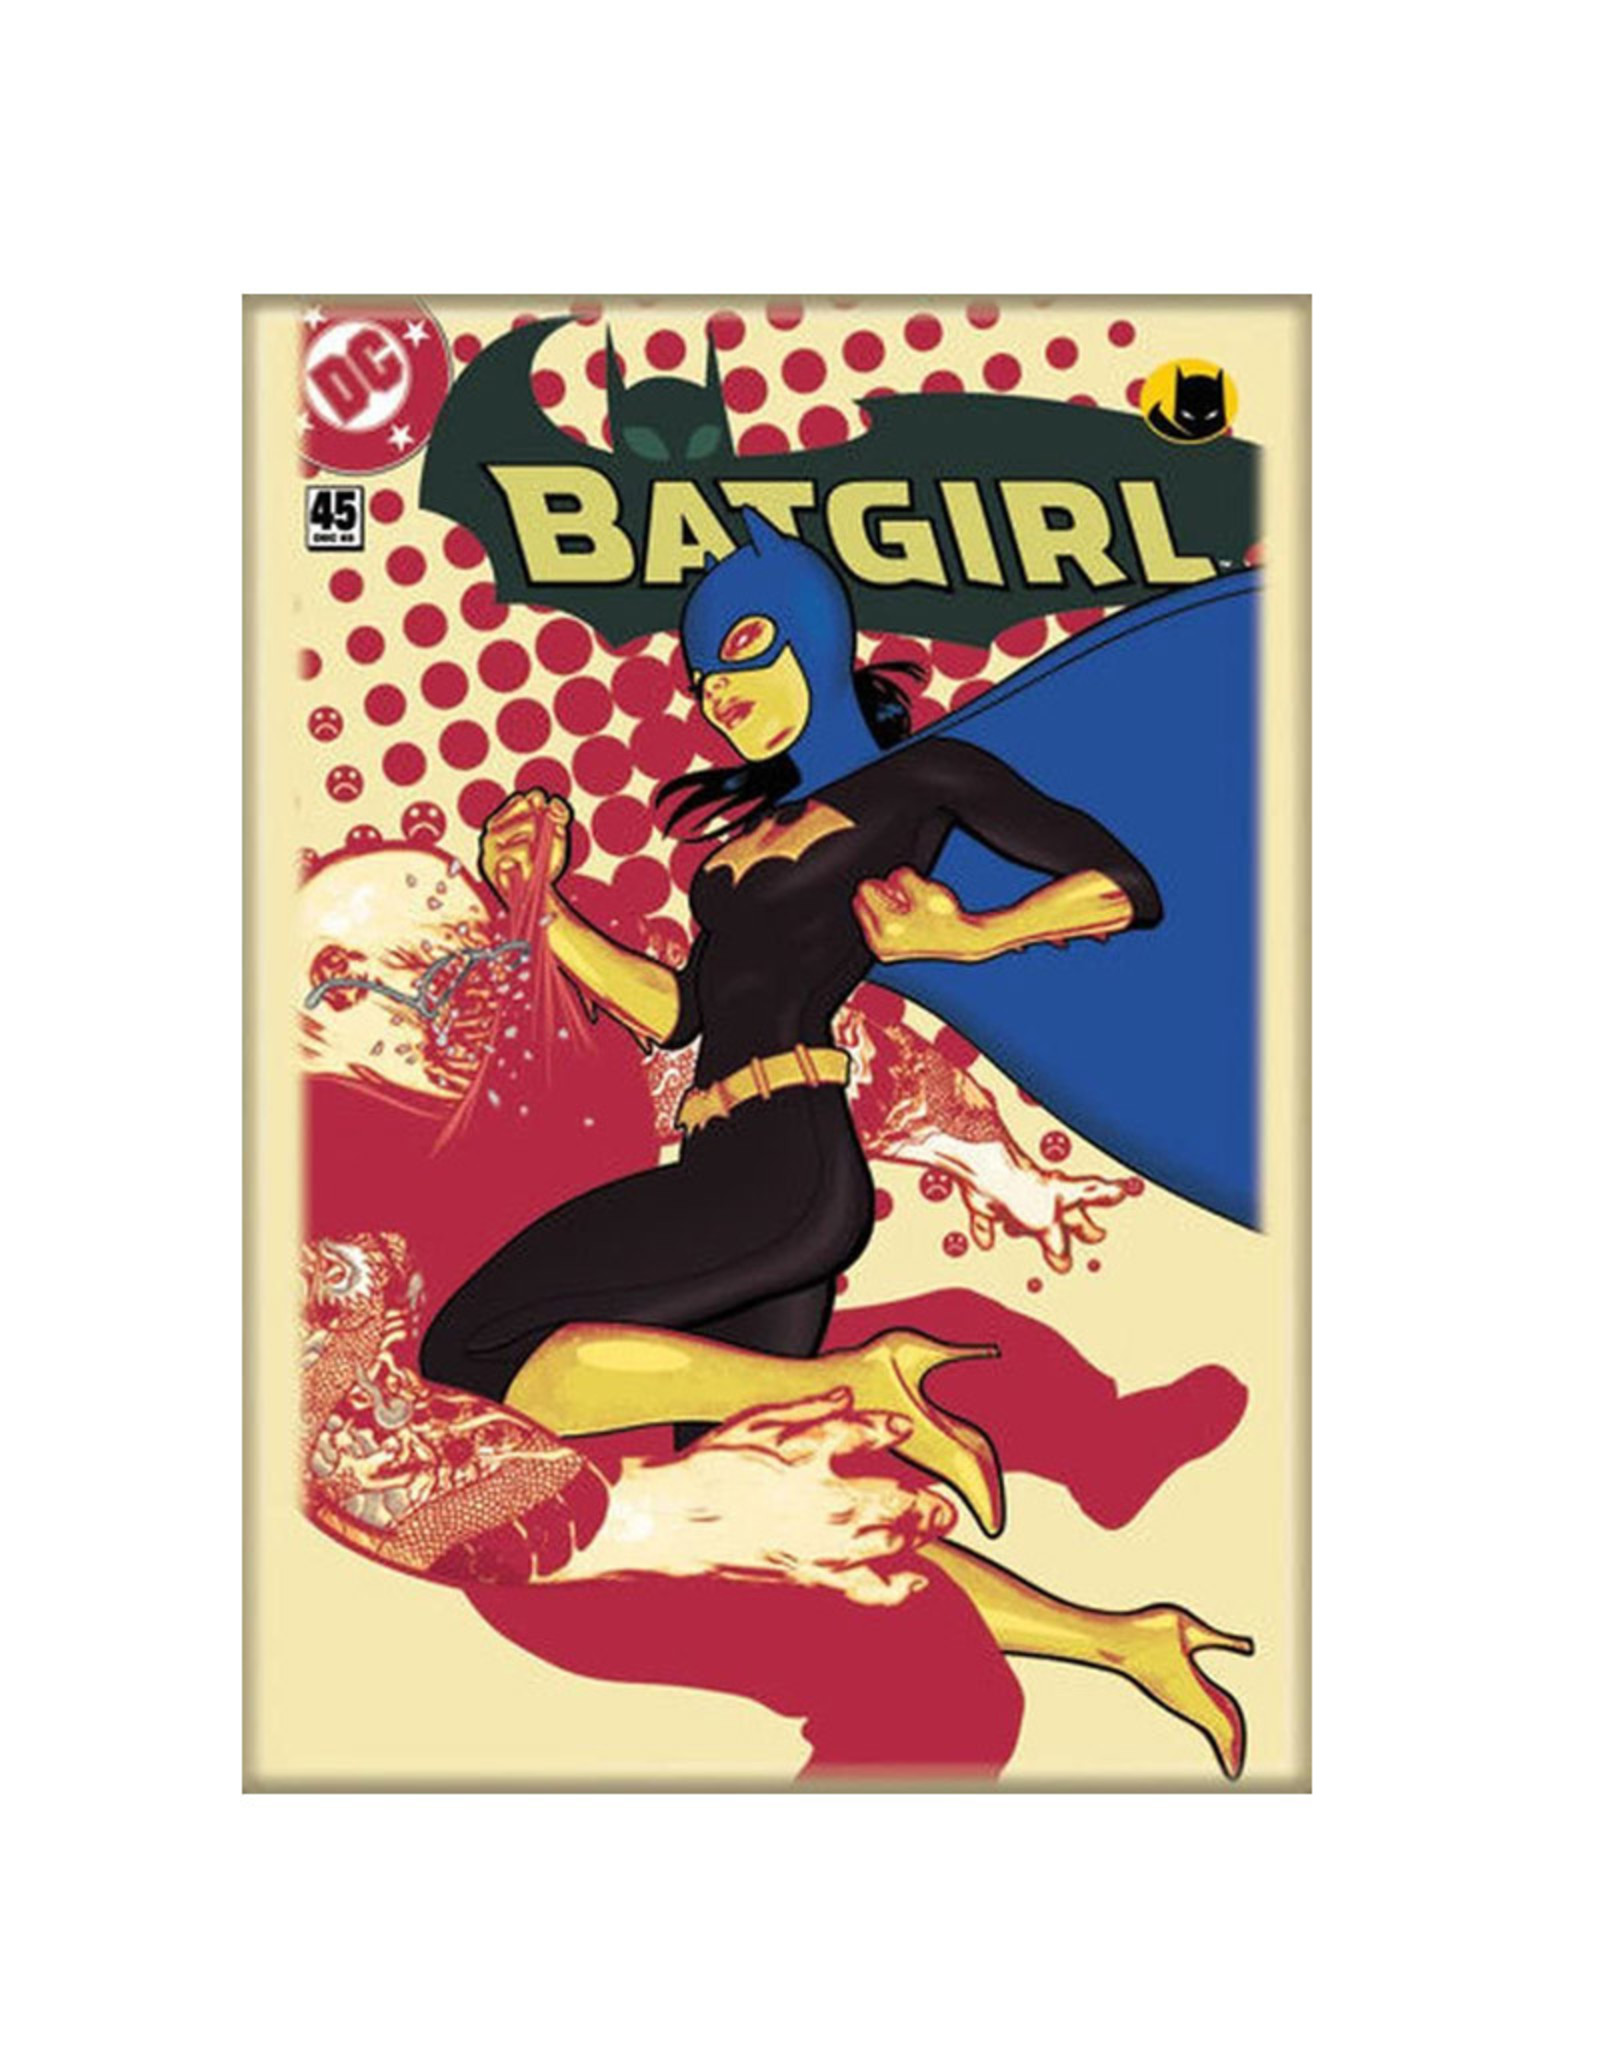 Ata-Boy Batgirl #45 magnet